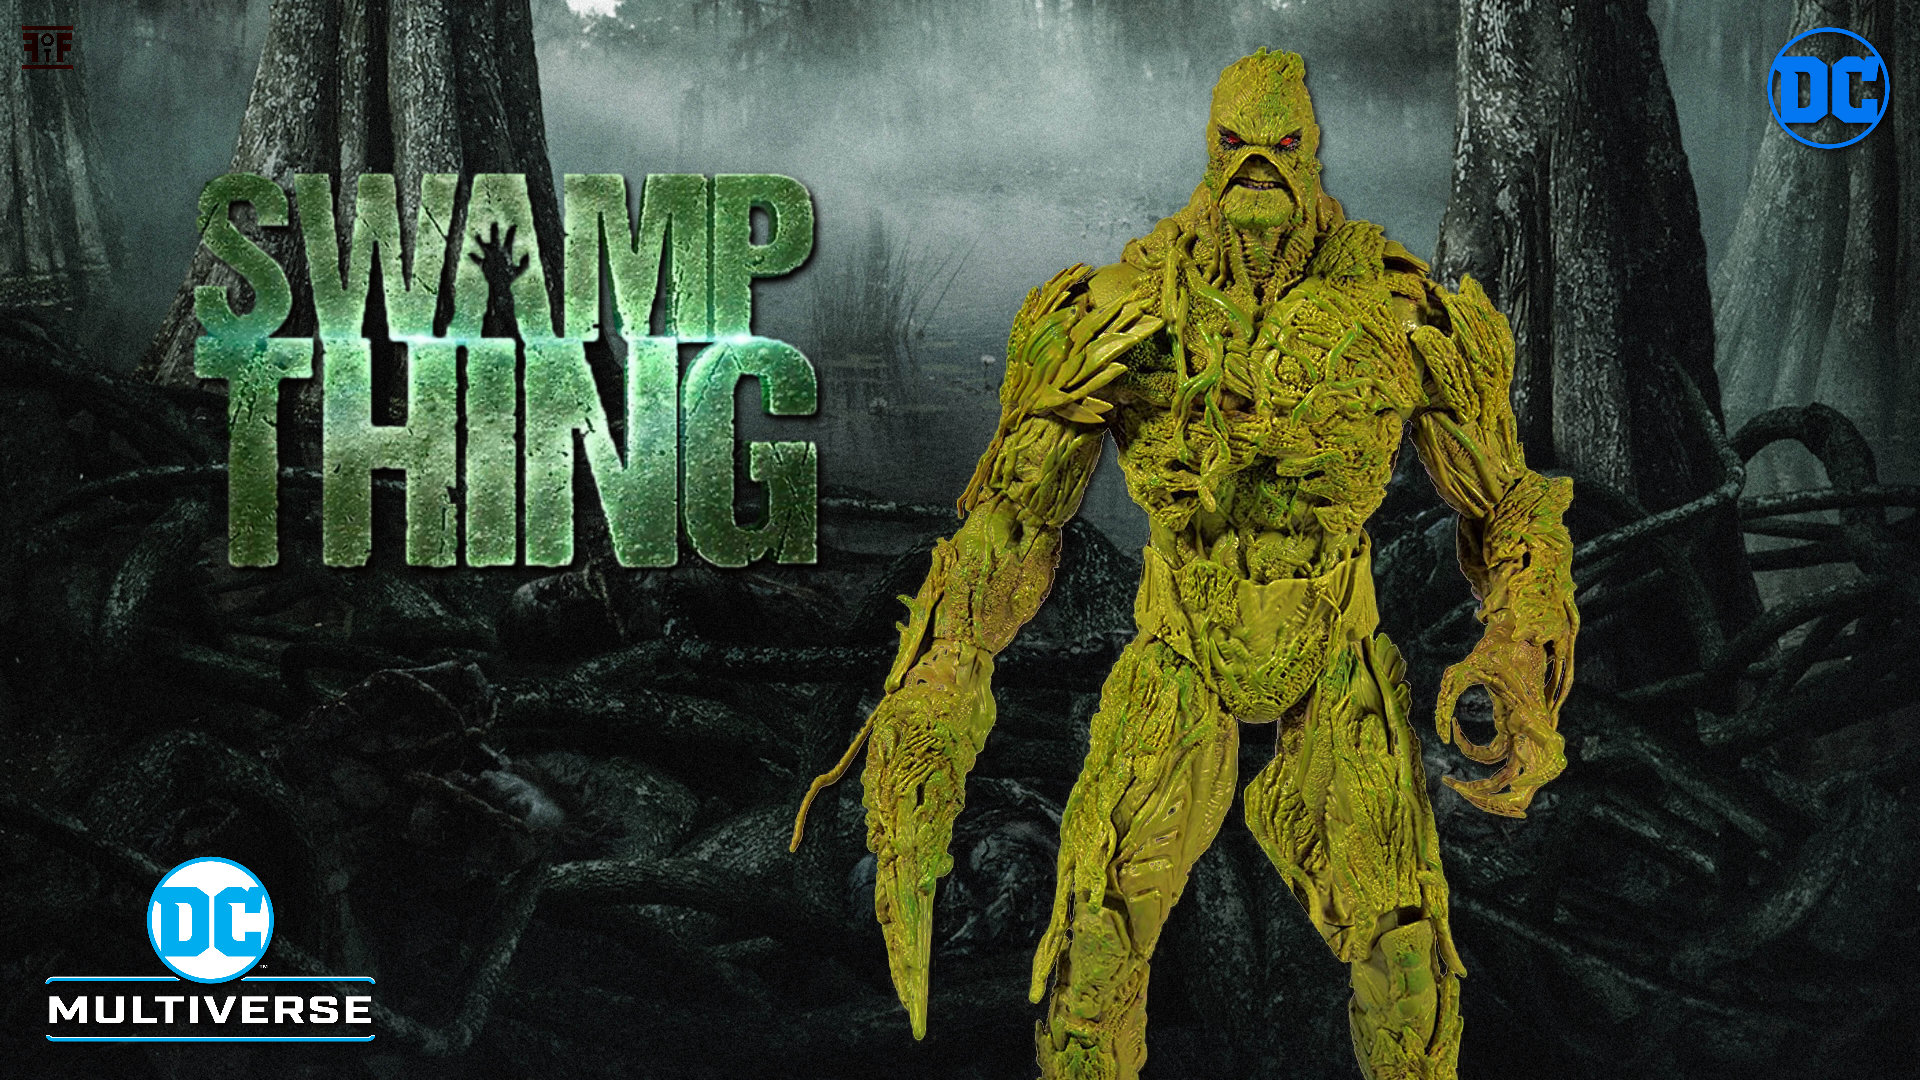 Swamp Thing Season 1 Wallpapers